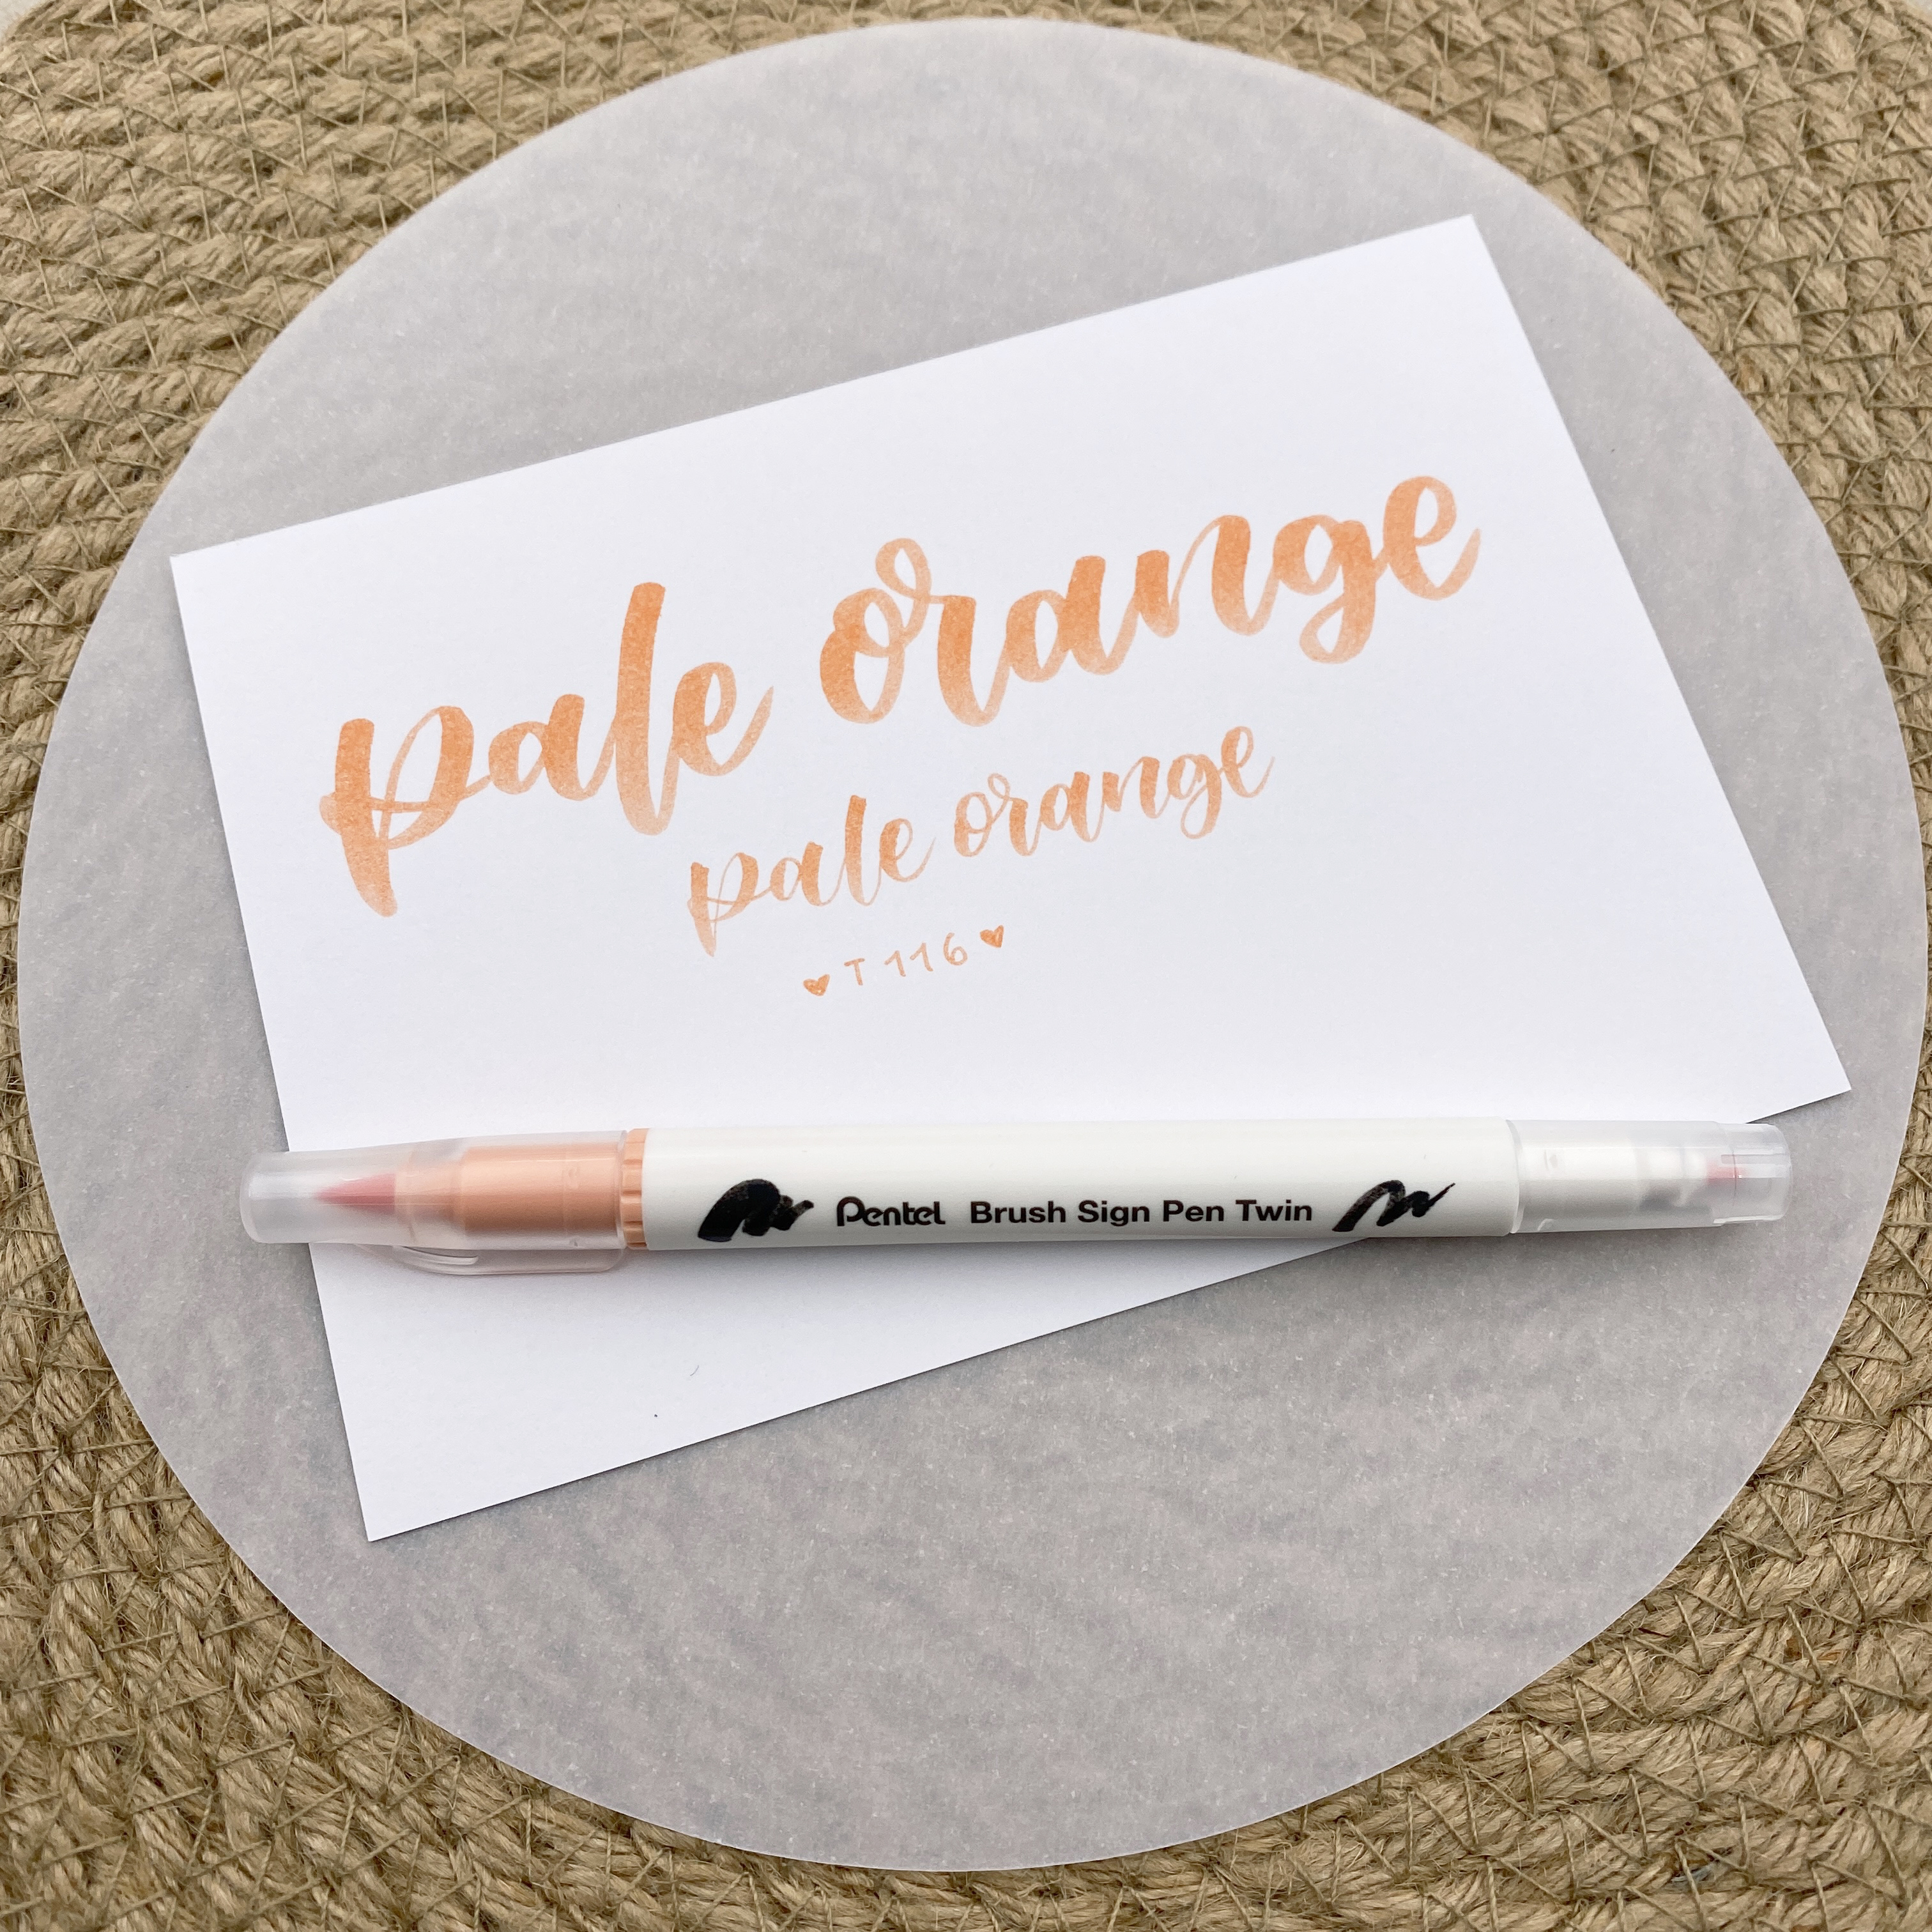 Pentel Brush Sign Pen Twin 116 Pale Orange